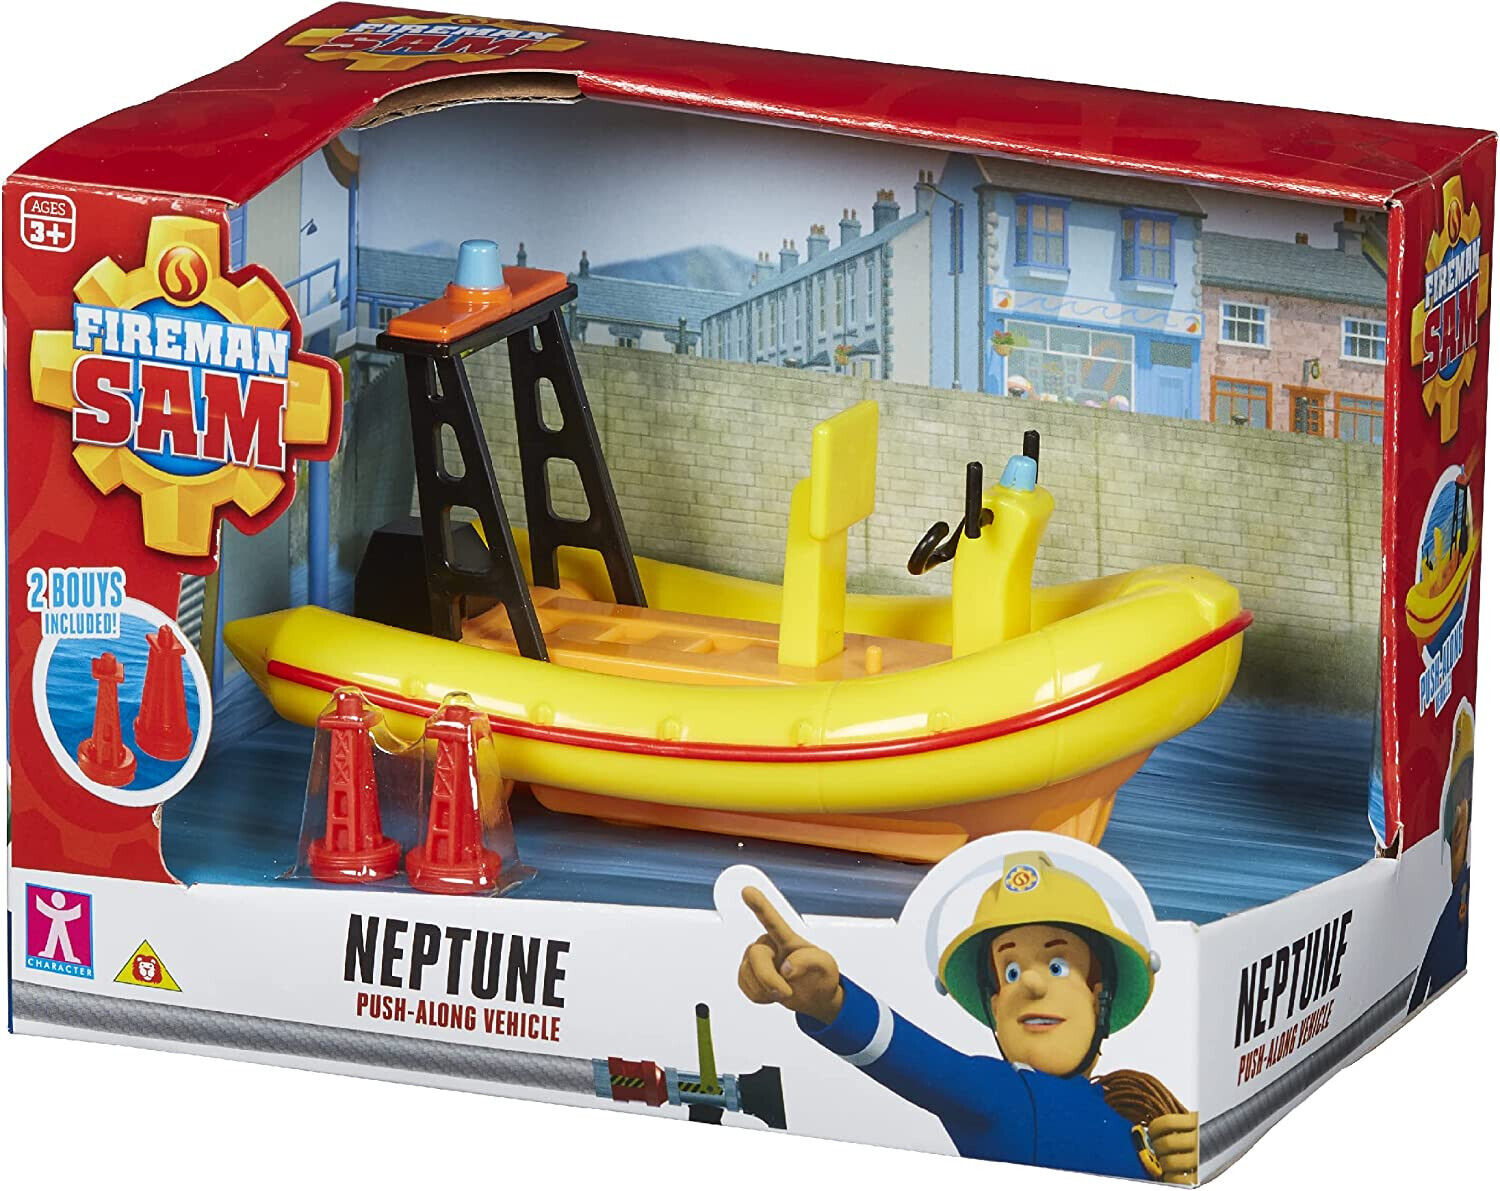 New Fireman Sam Neptune Boat - 03720 - Free Shipping